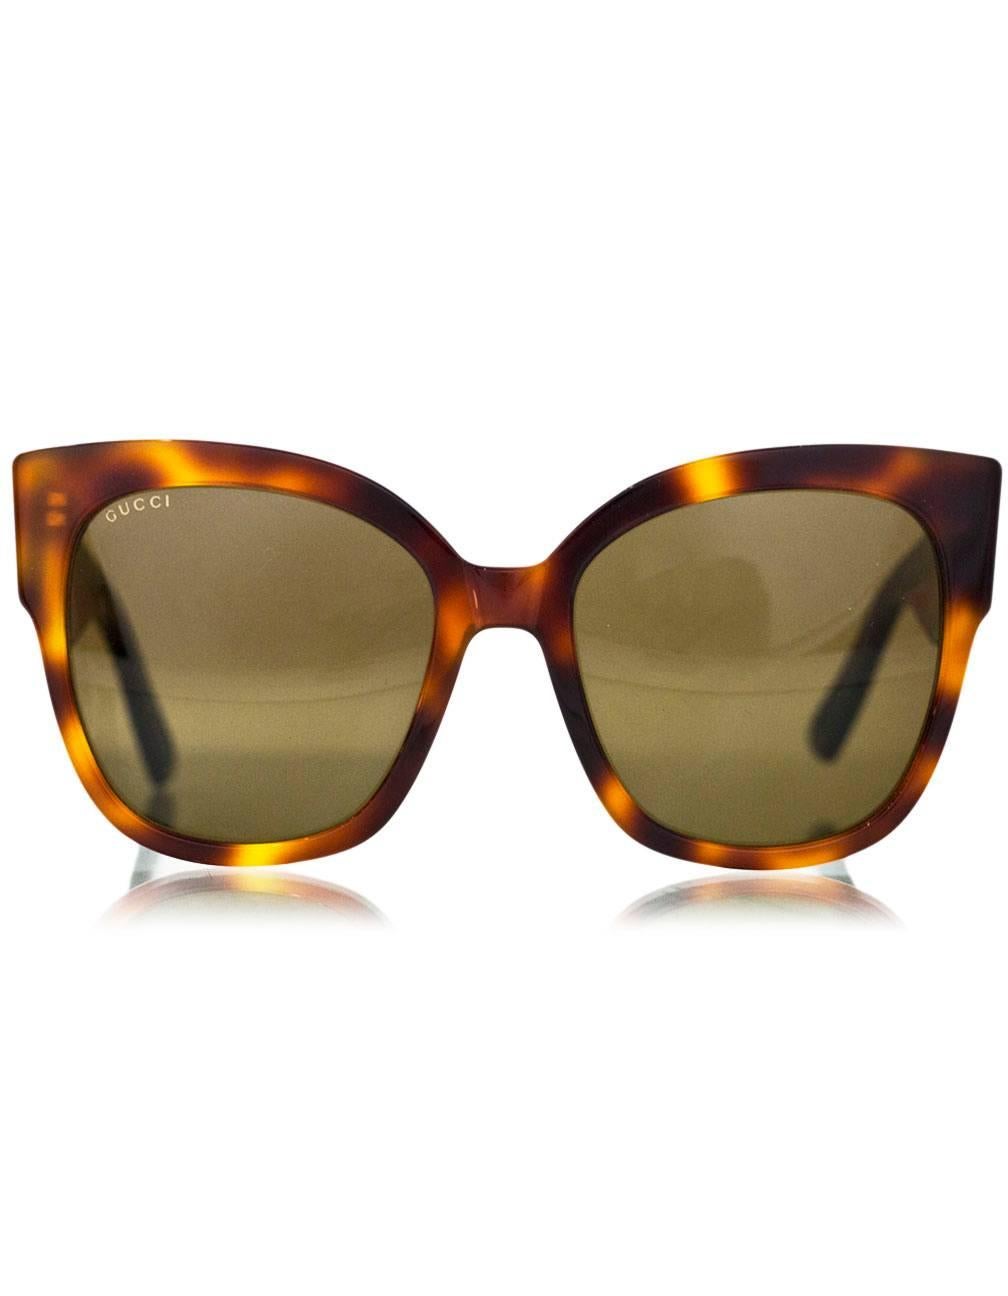 square frame acetate sunglasses with web